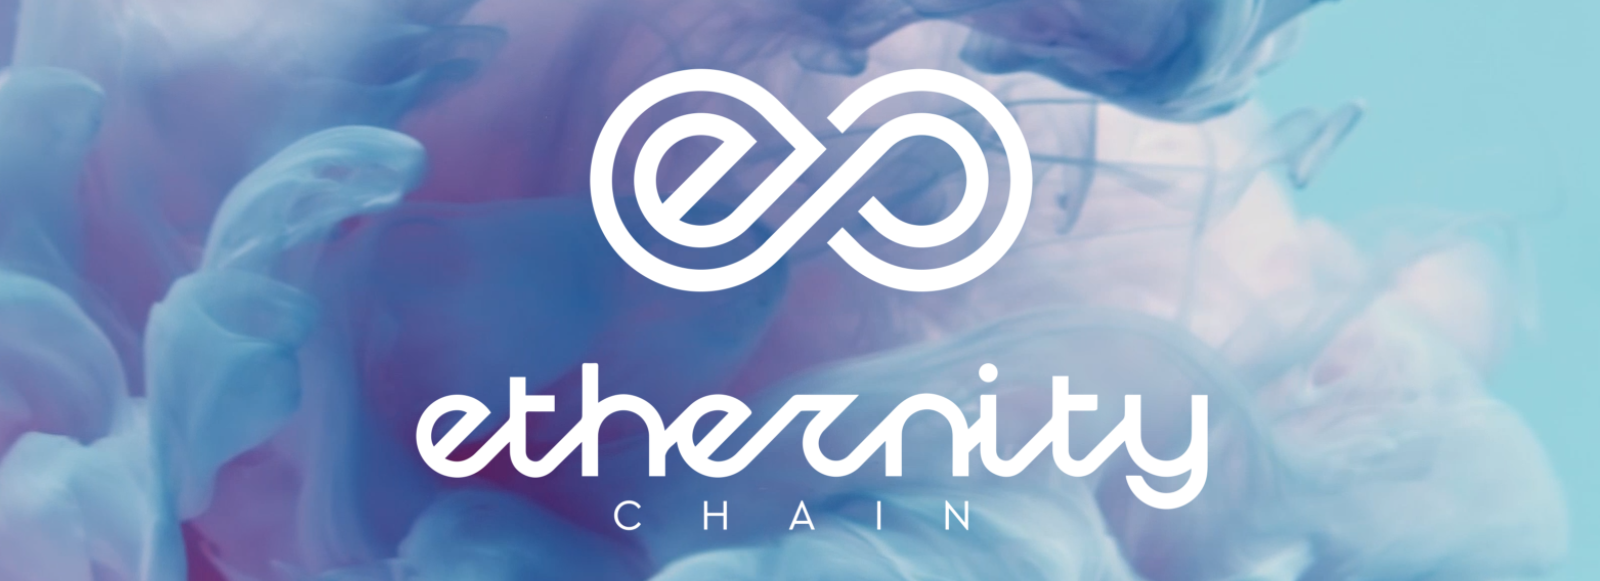 Ethernity Chain: новая звезда в мире DeFi инвестиций